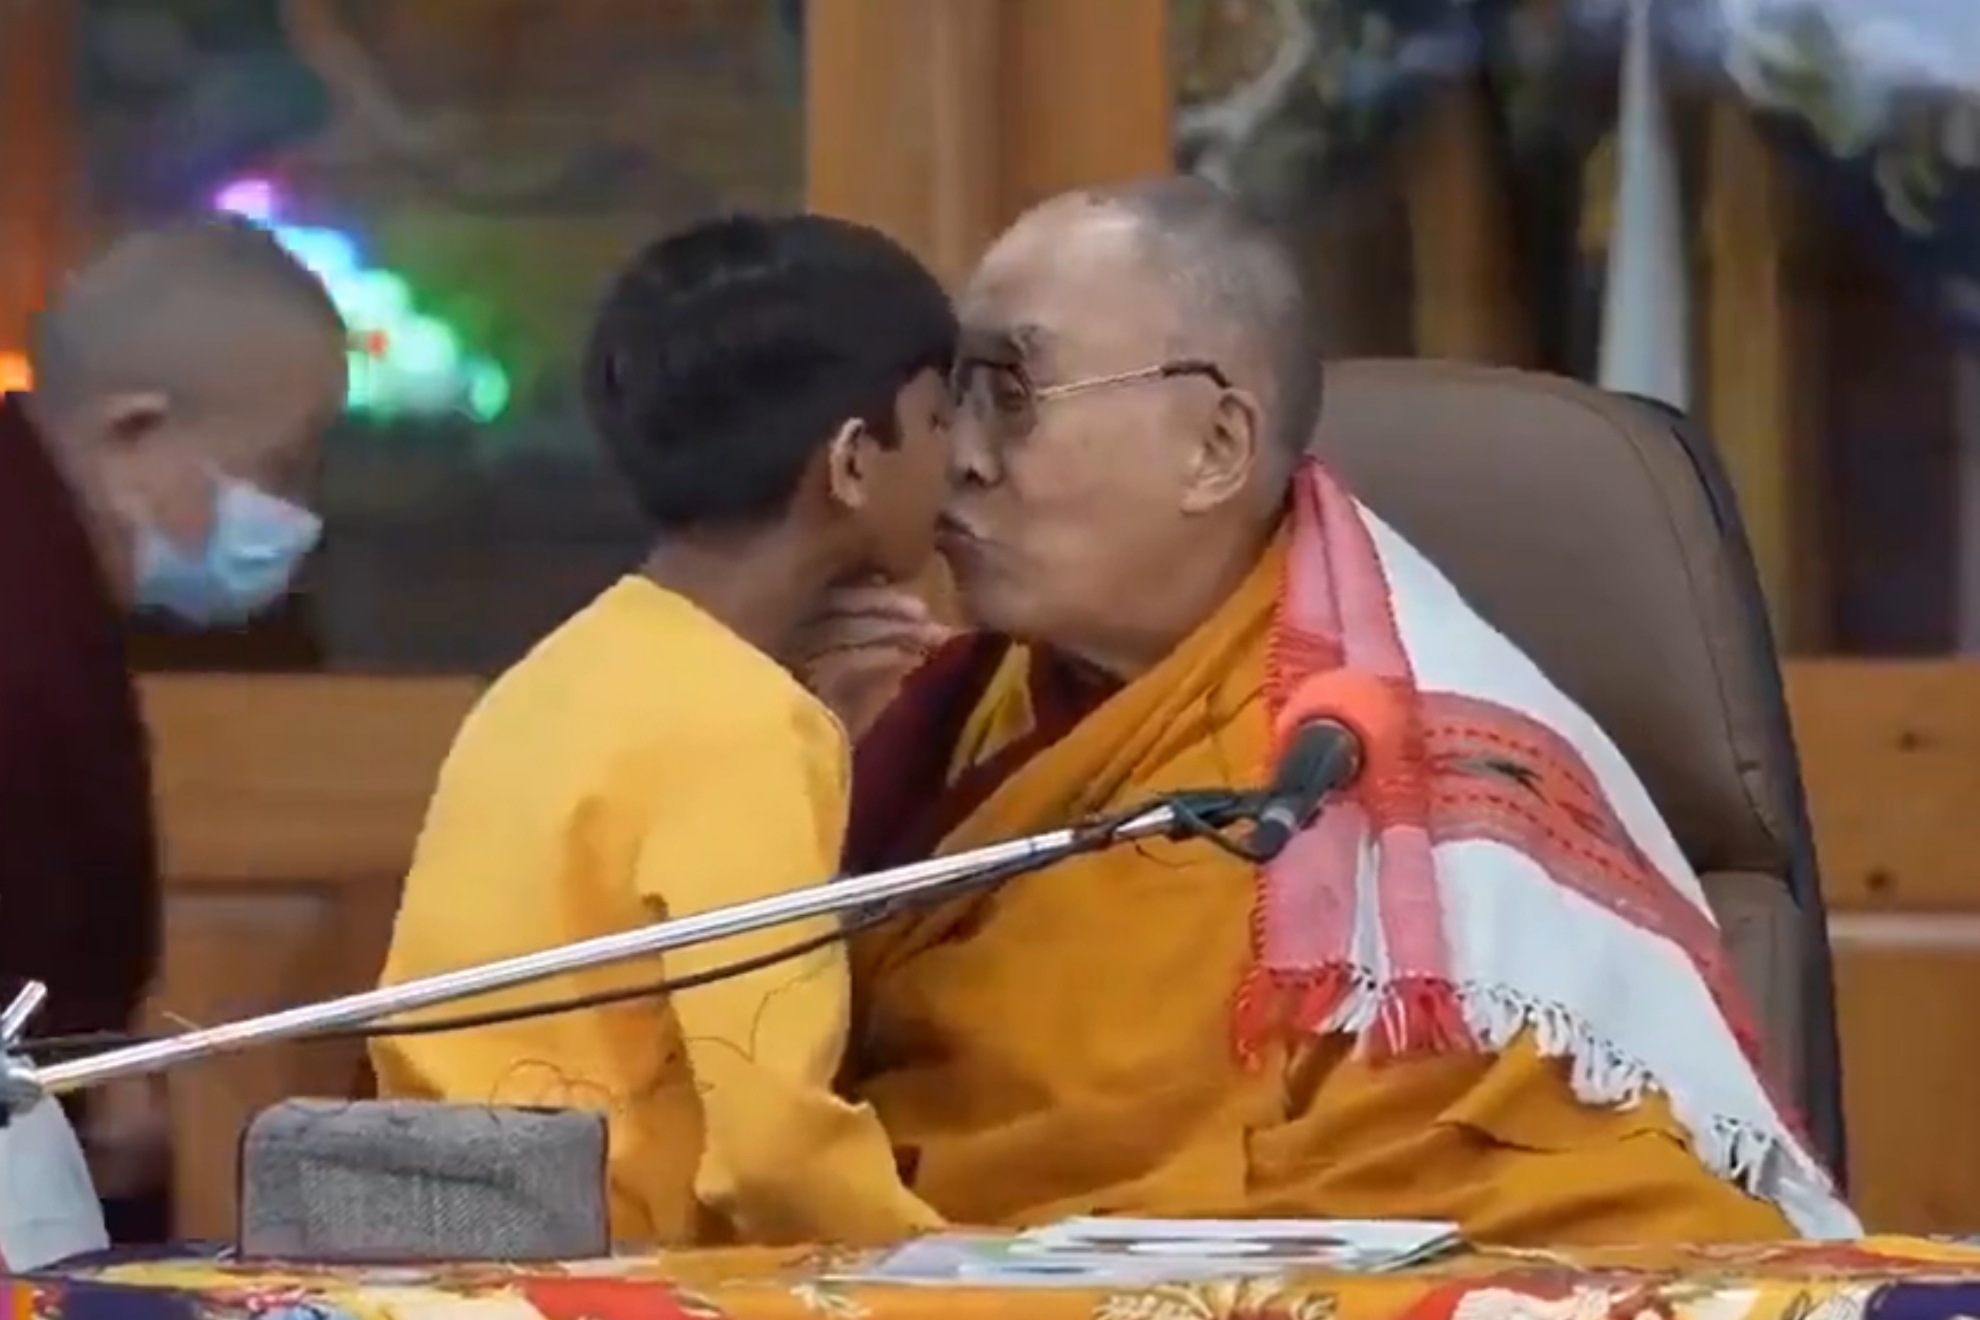 Spiritual leader, Dalai Lama apologises for asking boy to ‘suck his tongue’